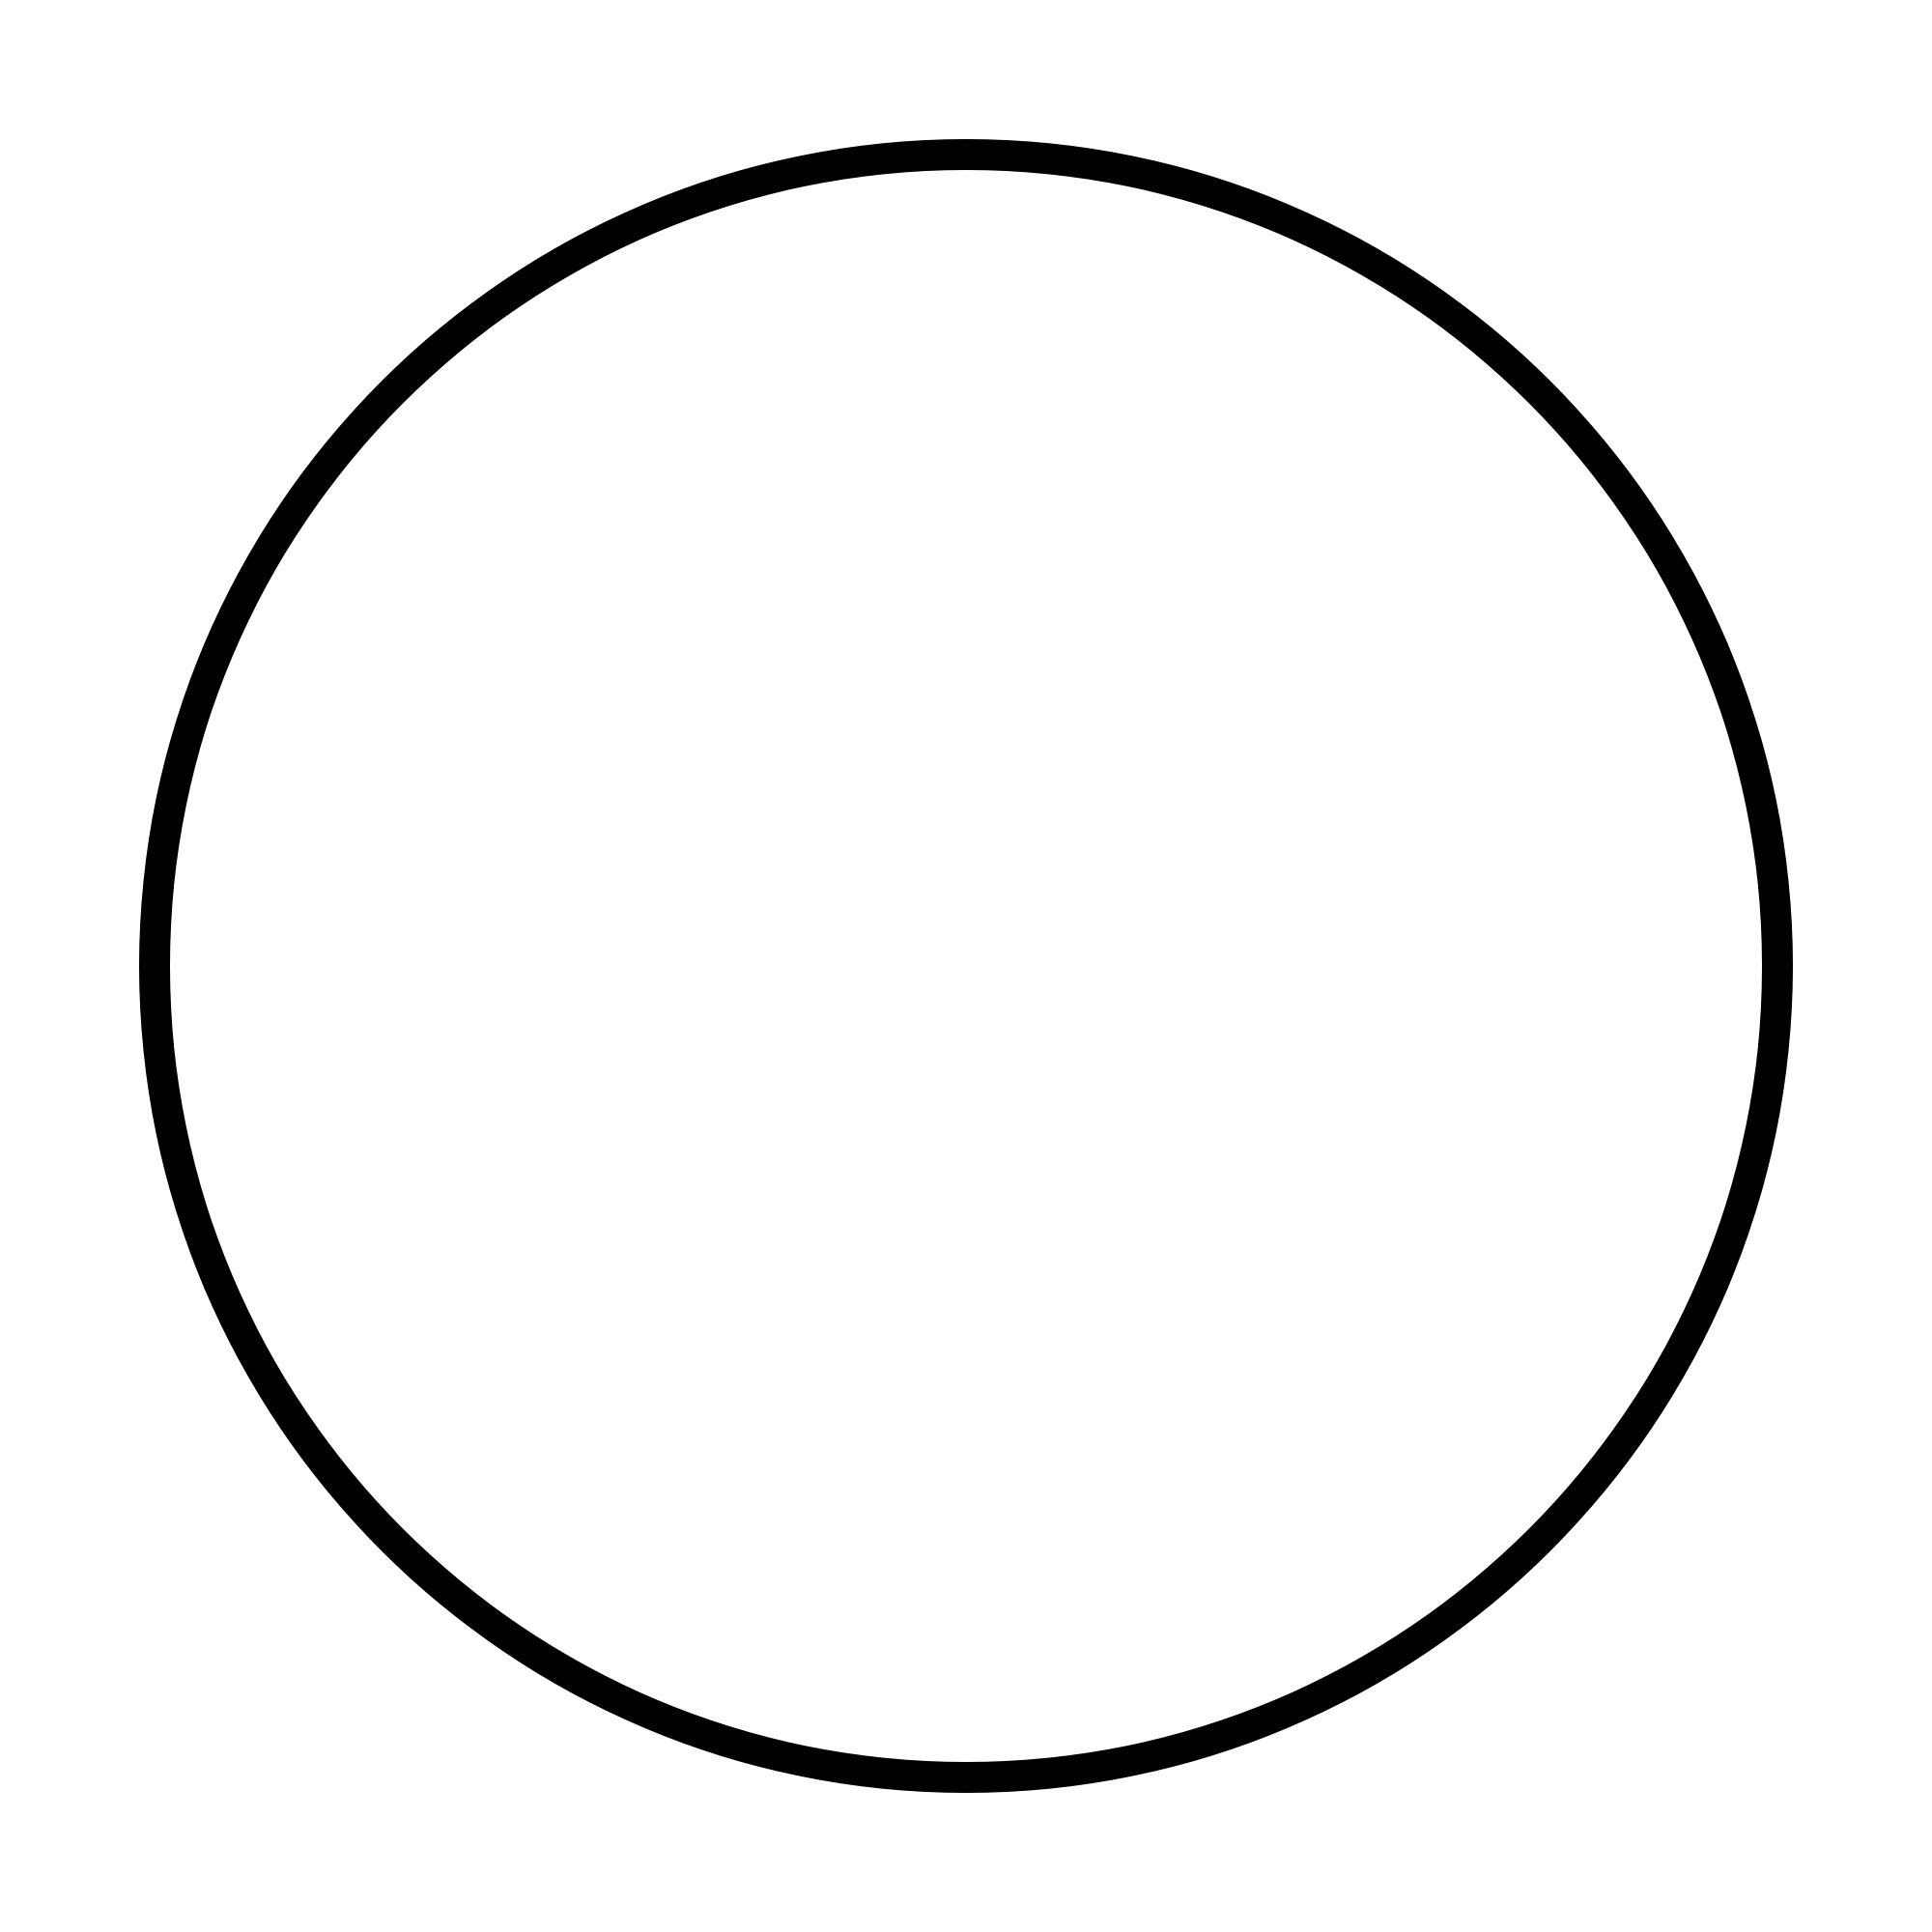 File:Circle - black simple - Wikimedia Commons